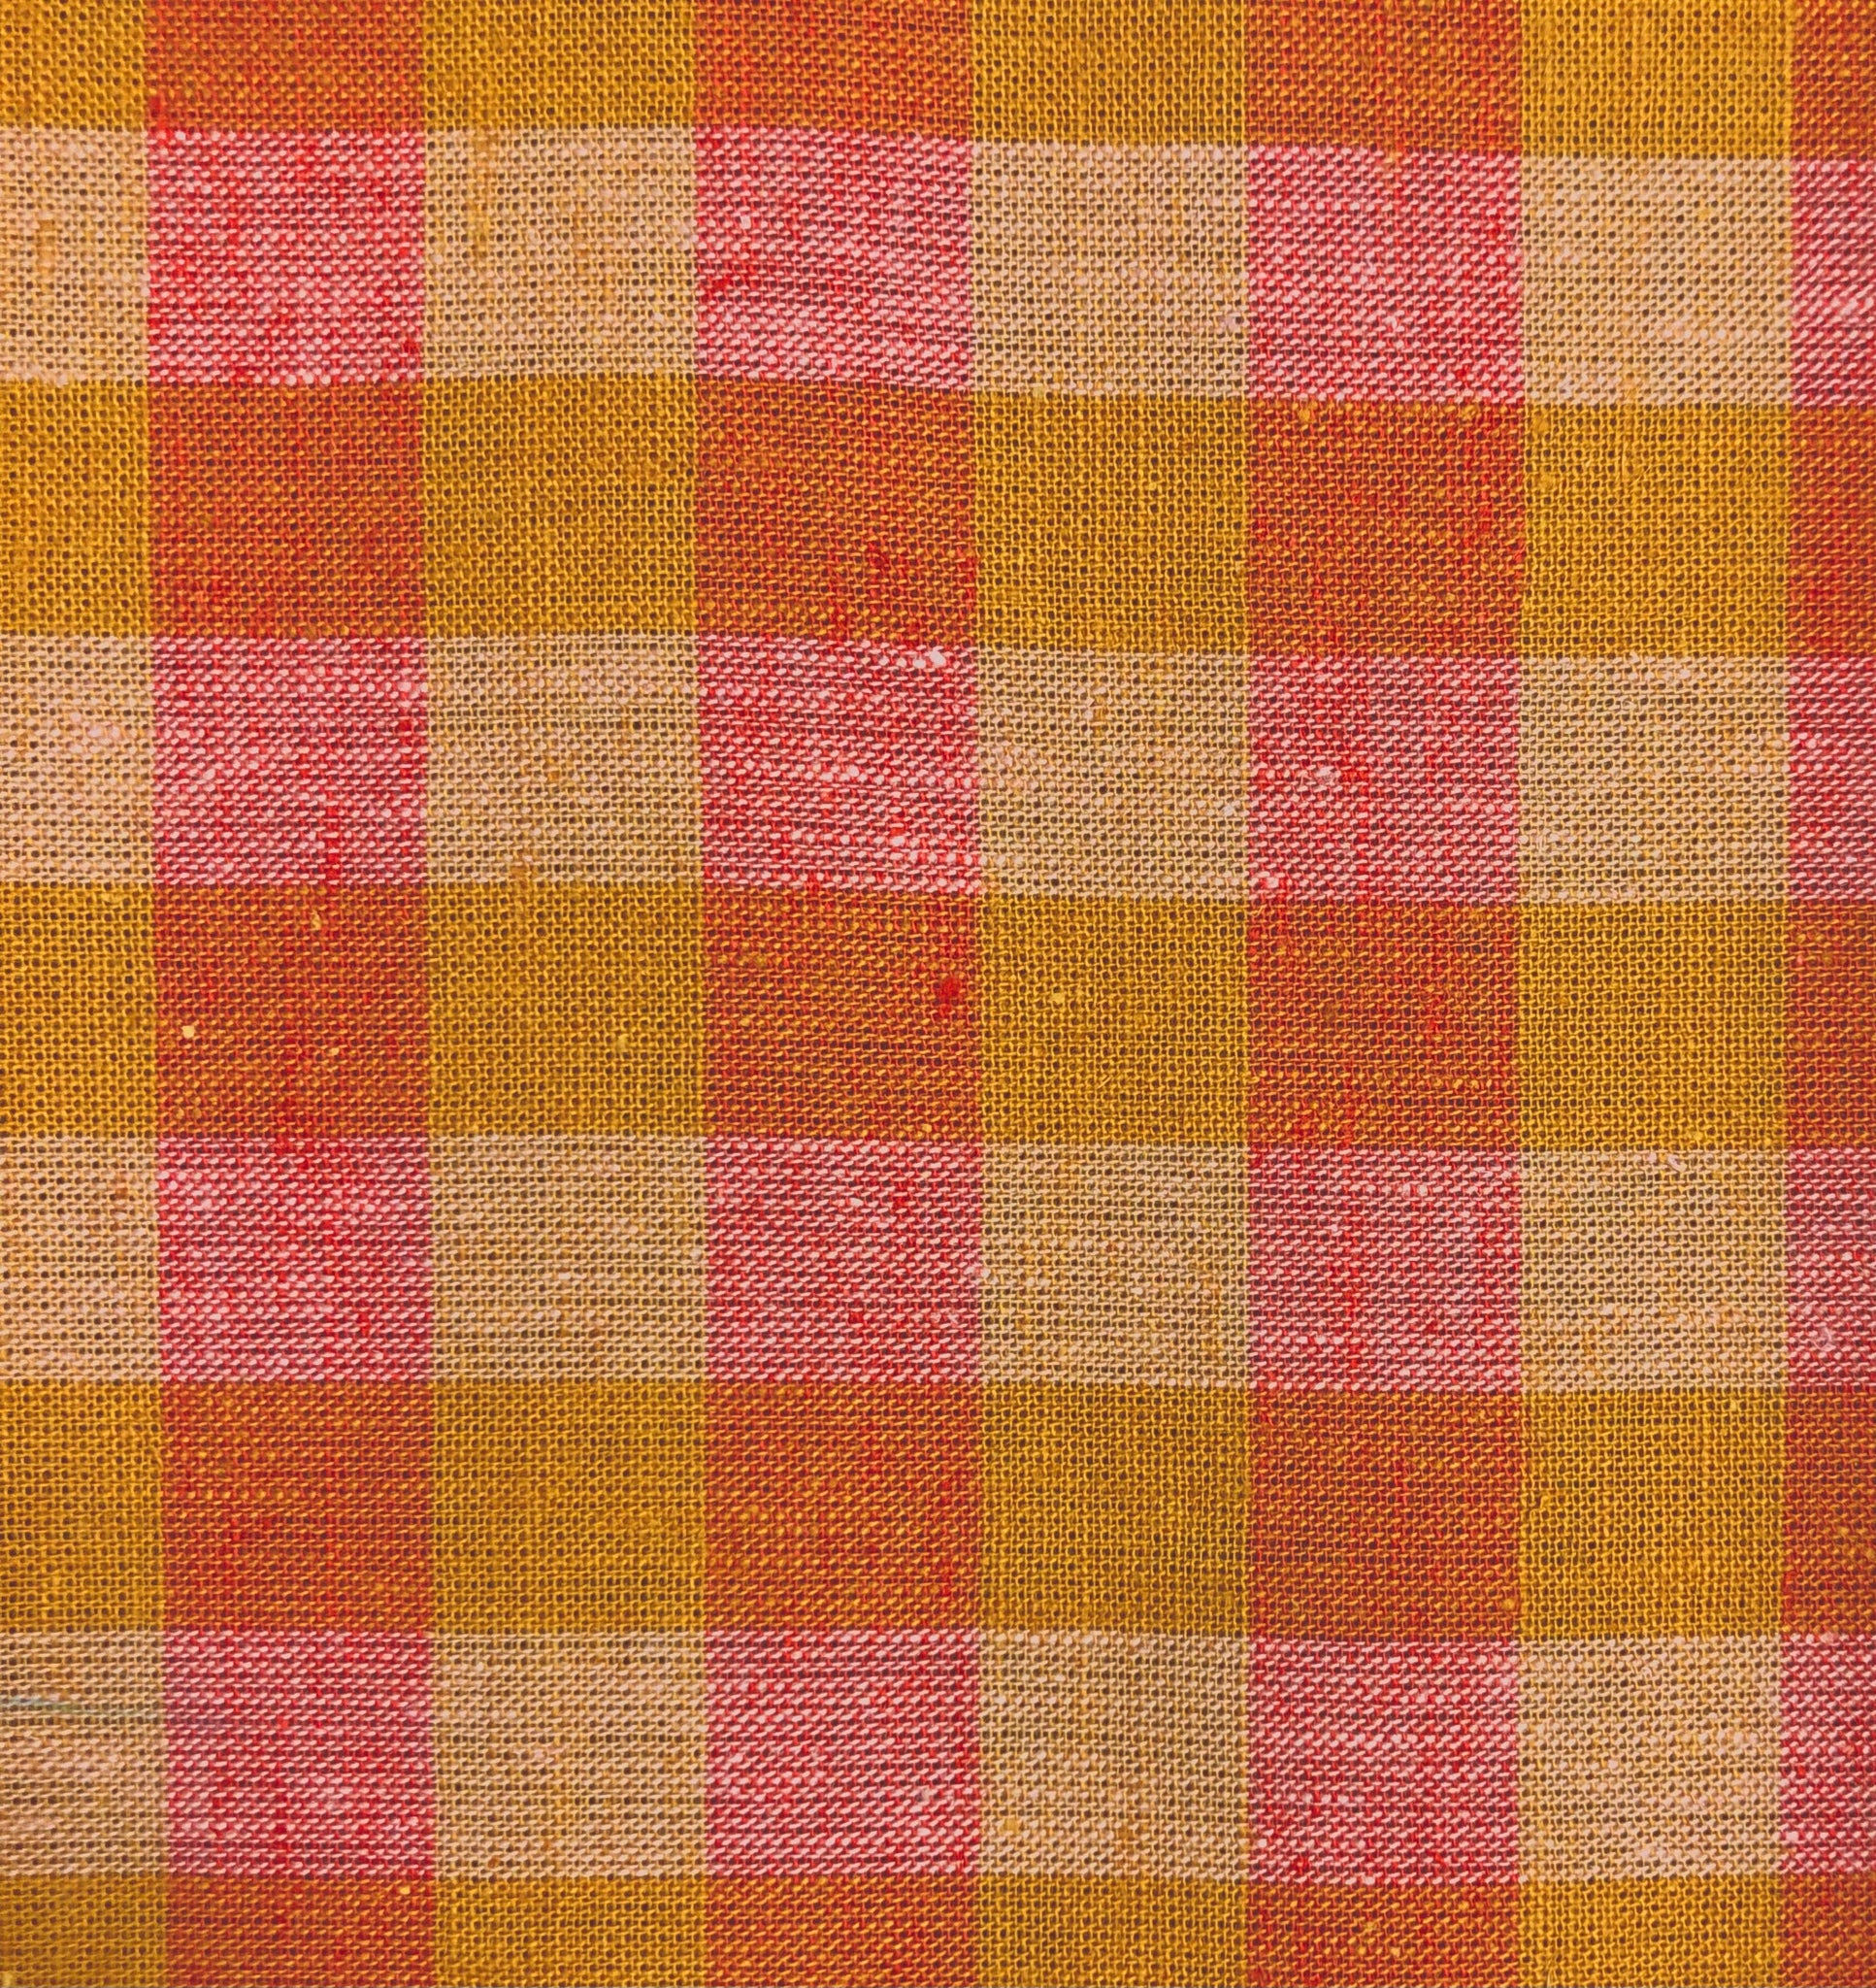 Meadow shirt in cotton/linen tangerine check